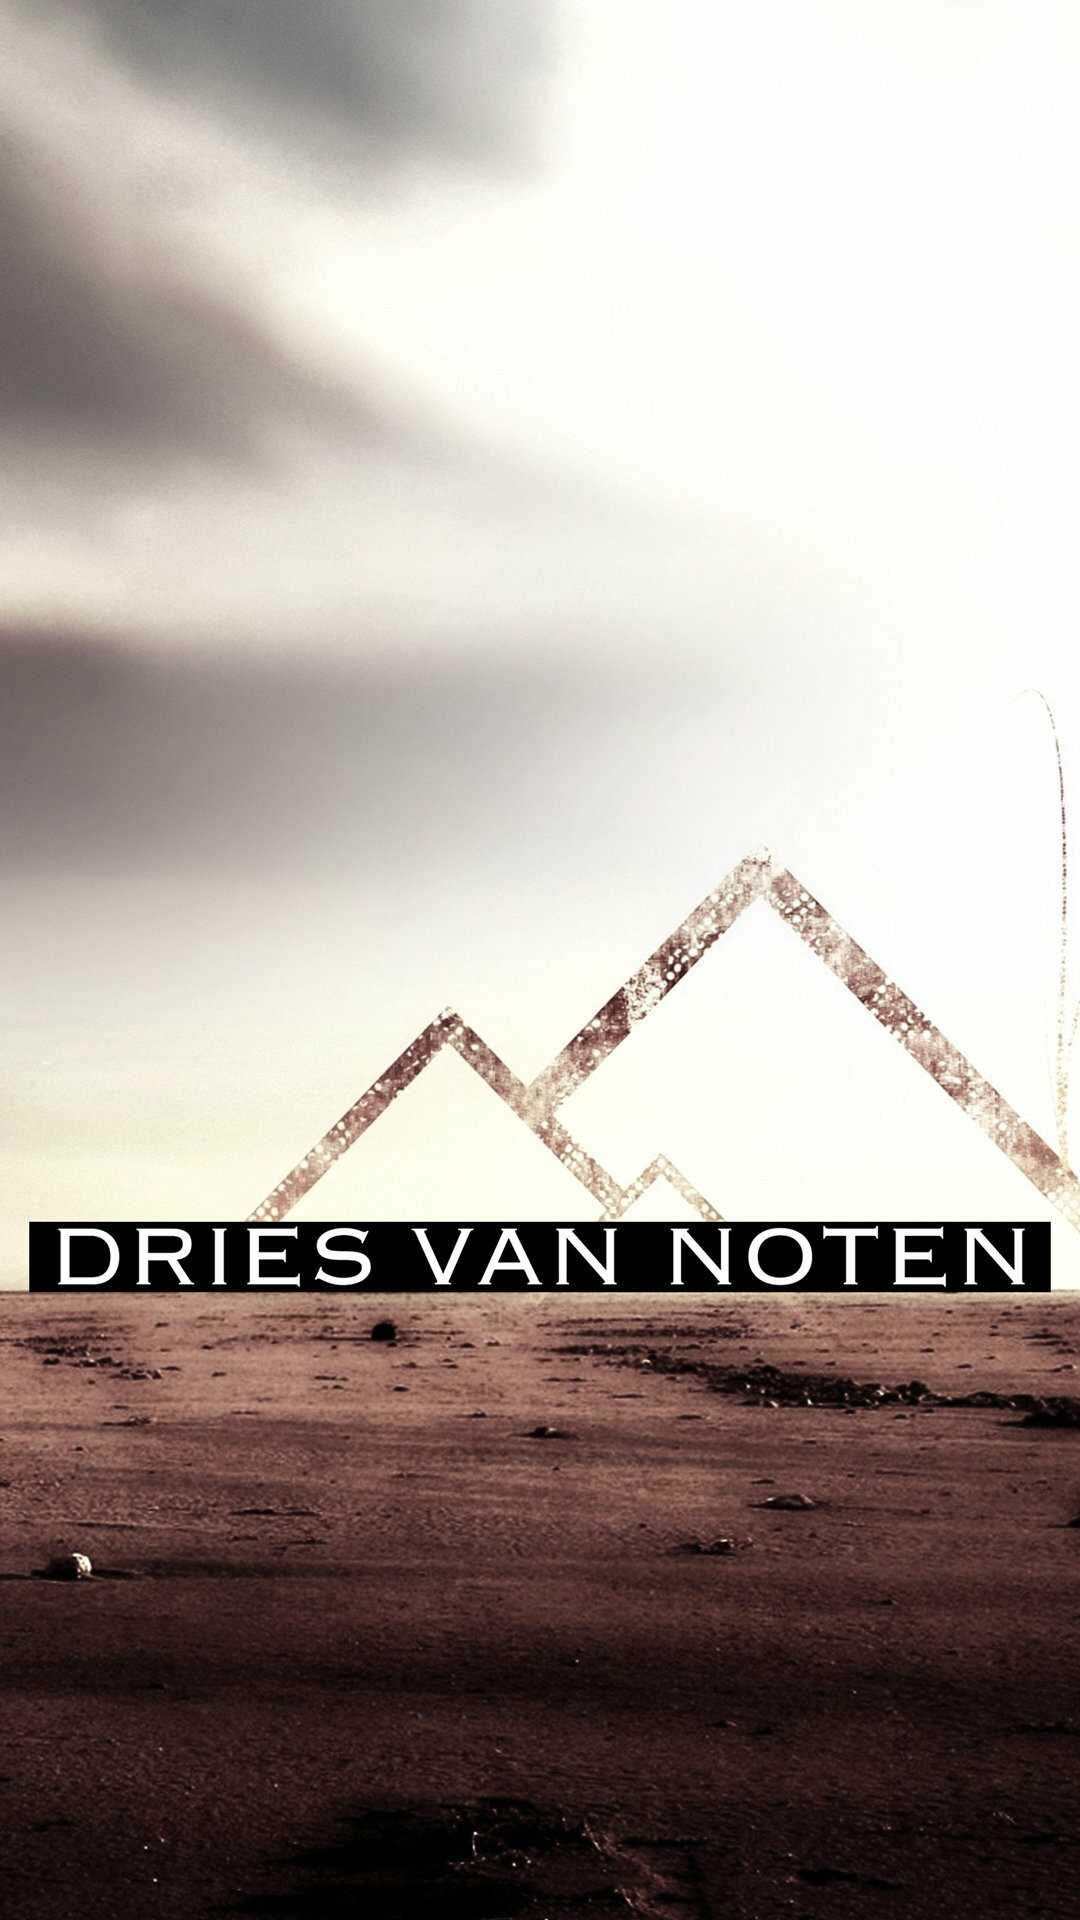 Dries Van Noten: One of the most successful members of the renowned Antwerp Six. 1080x1920 Full HD Wallpaper.